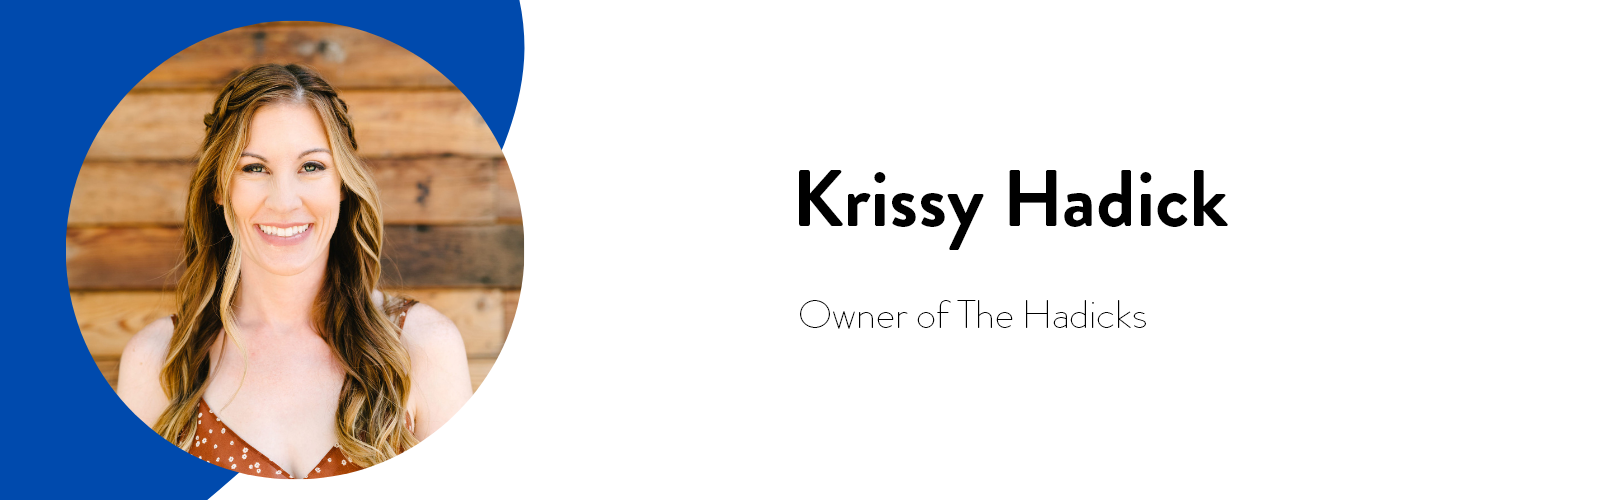 Krissy Hadick (1600 x 500 px)